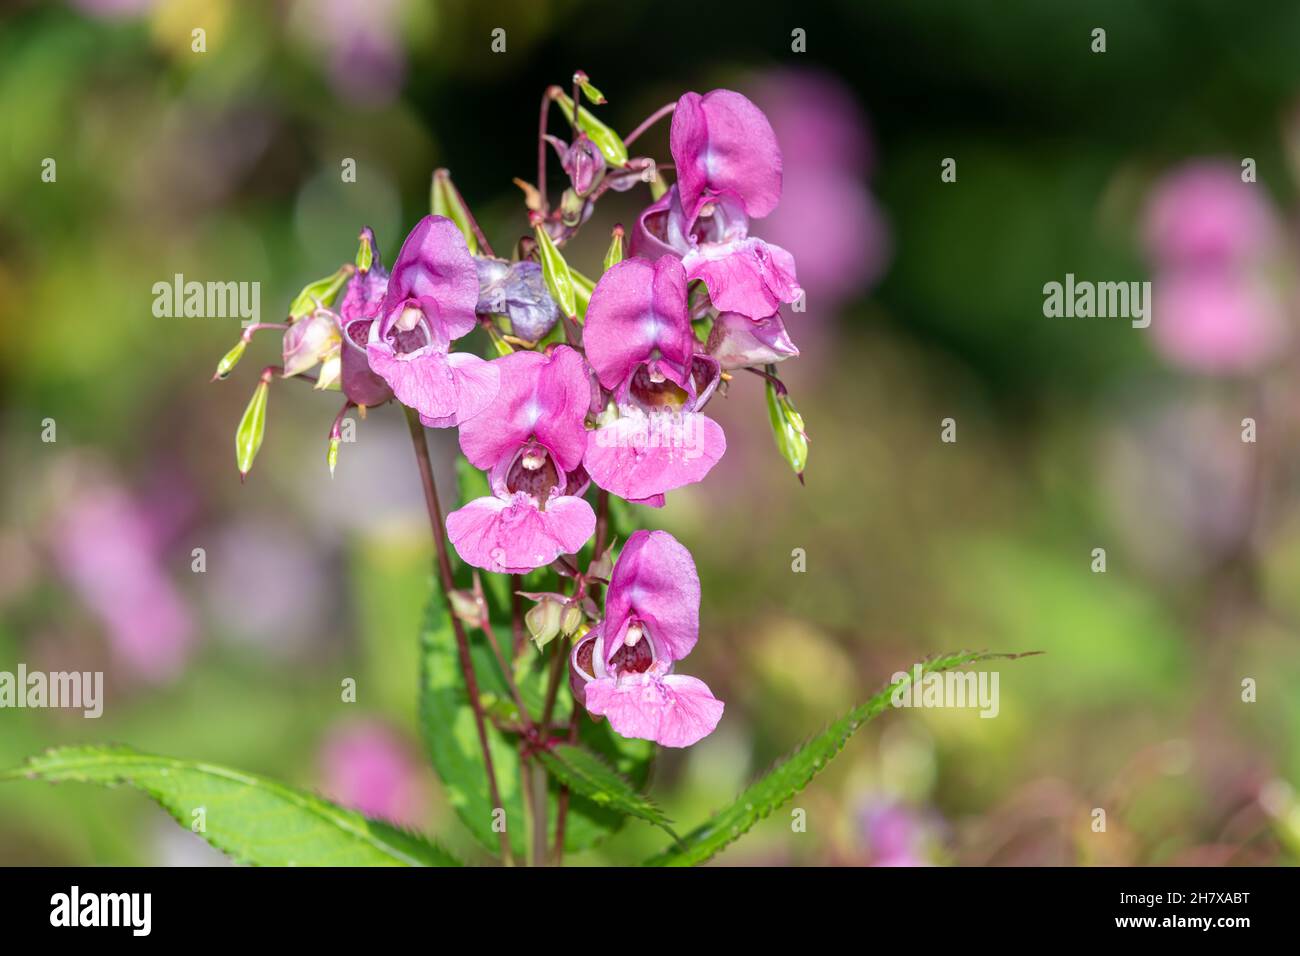 Himalayan balsam (impatiens gladulifera) flowers in bloom Stock Photo